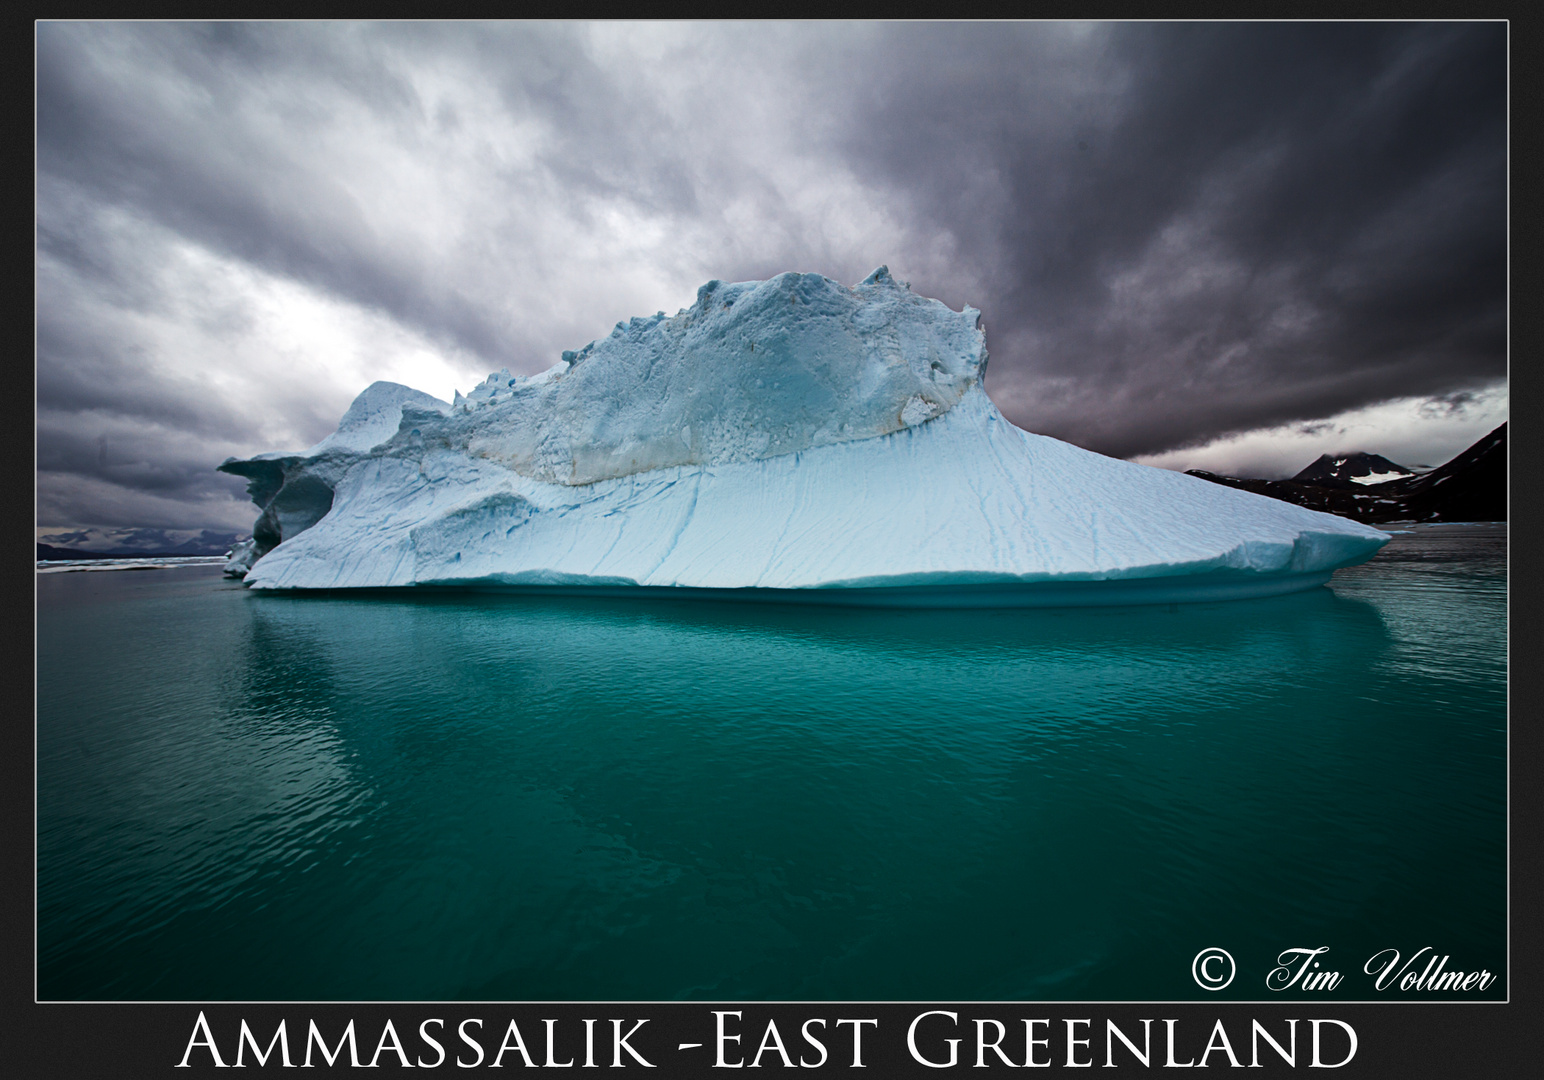 Dream of Greenland